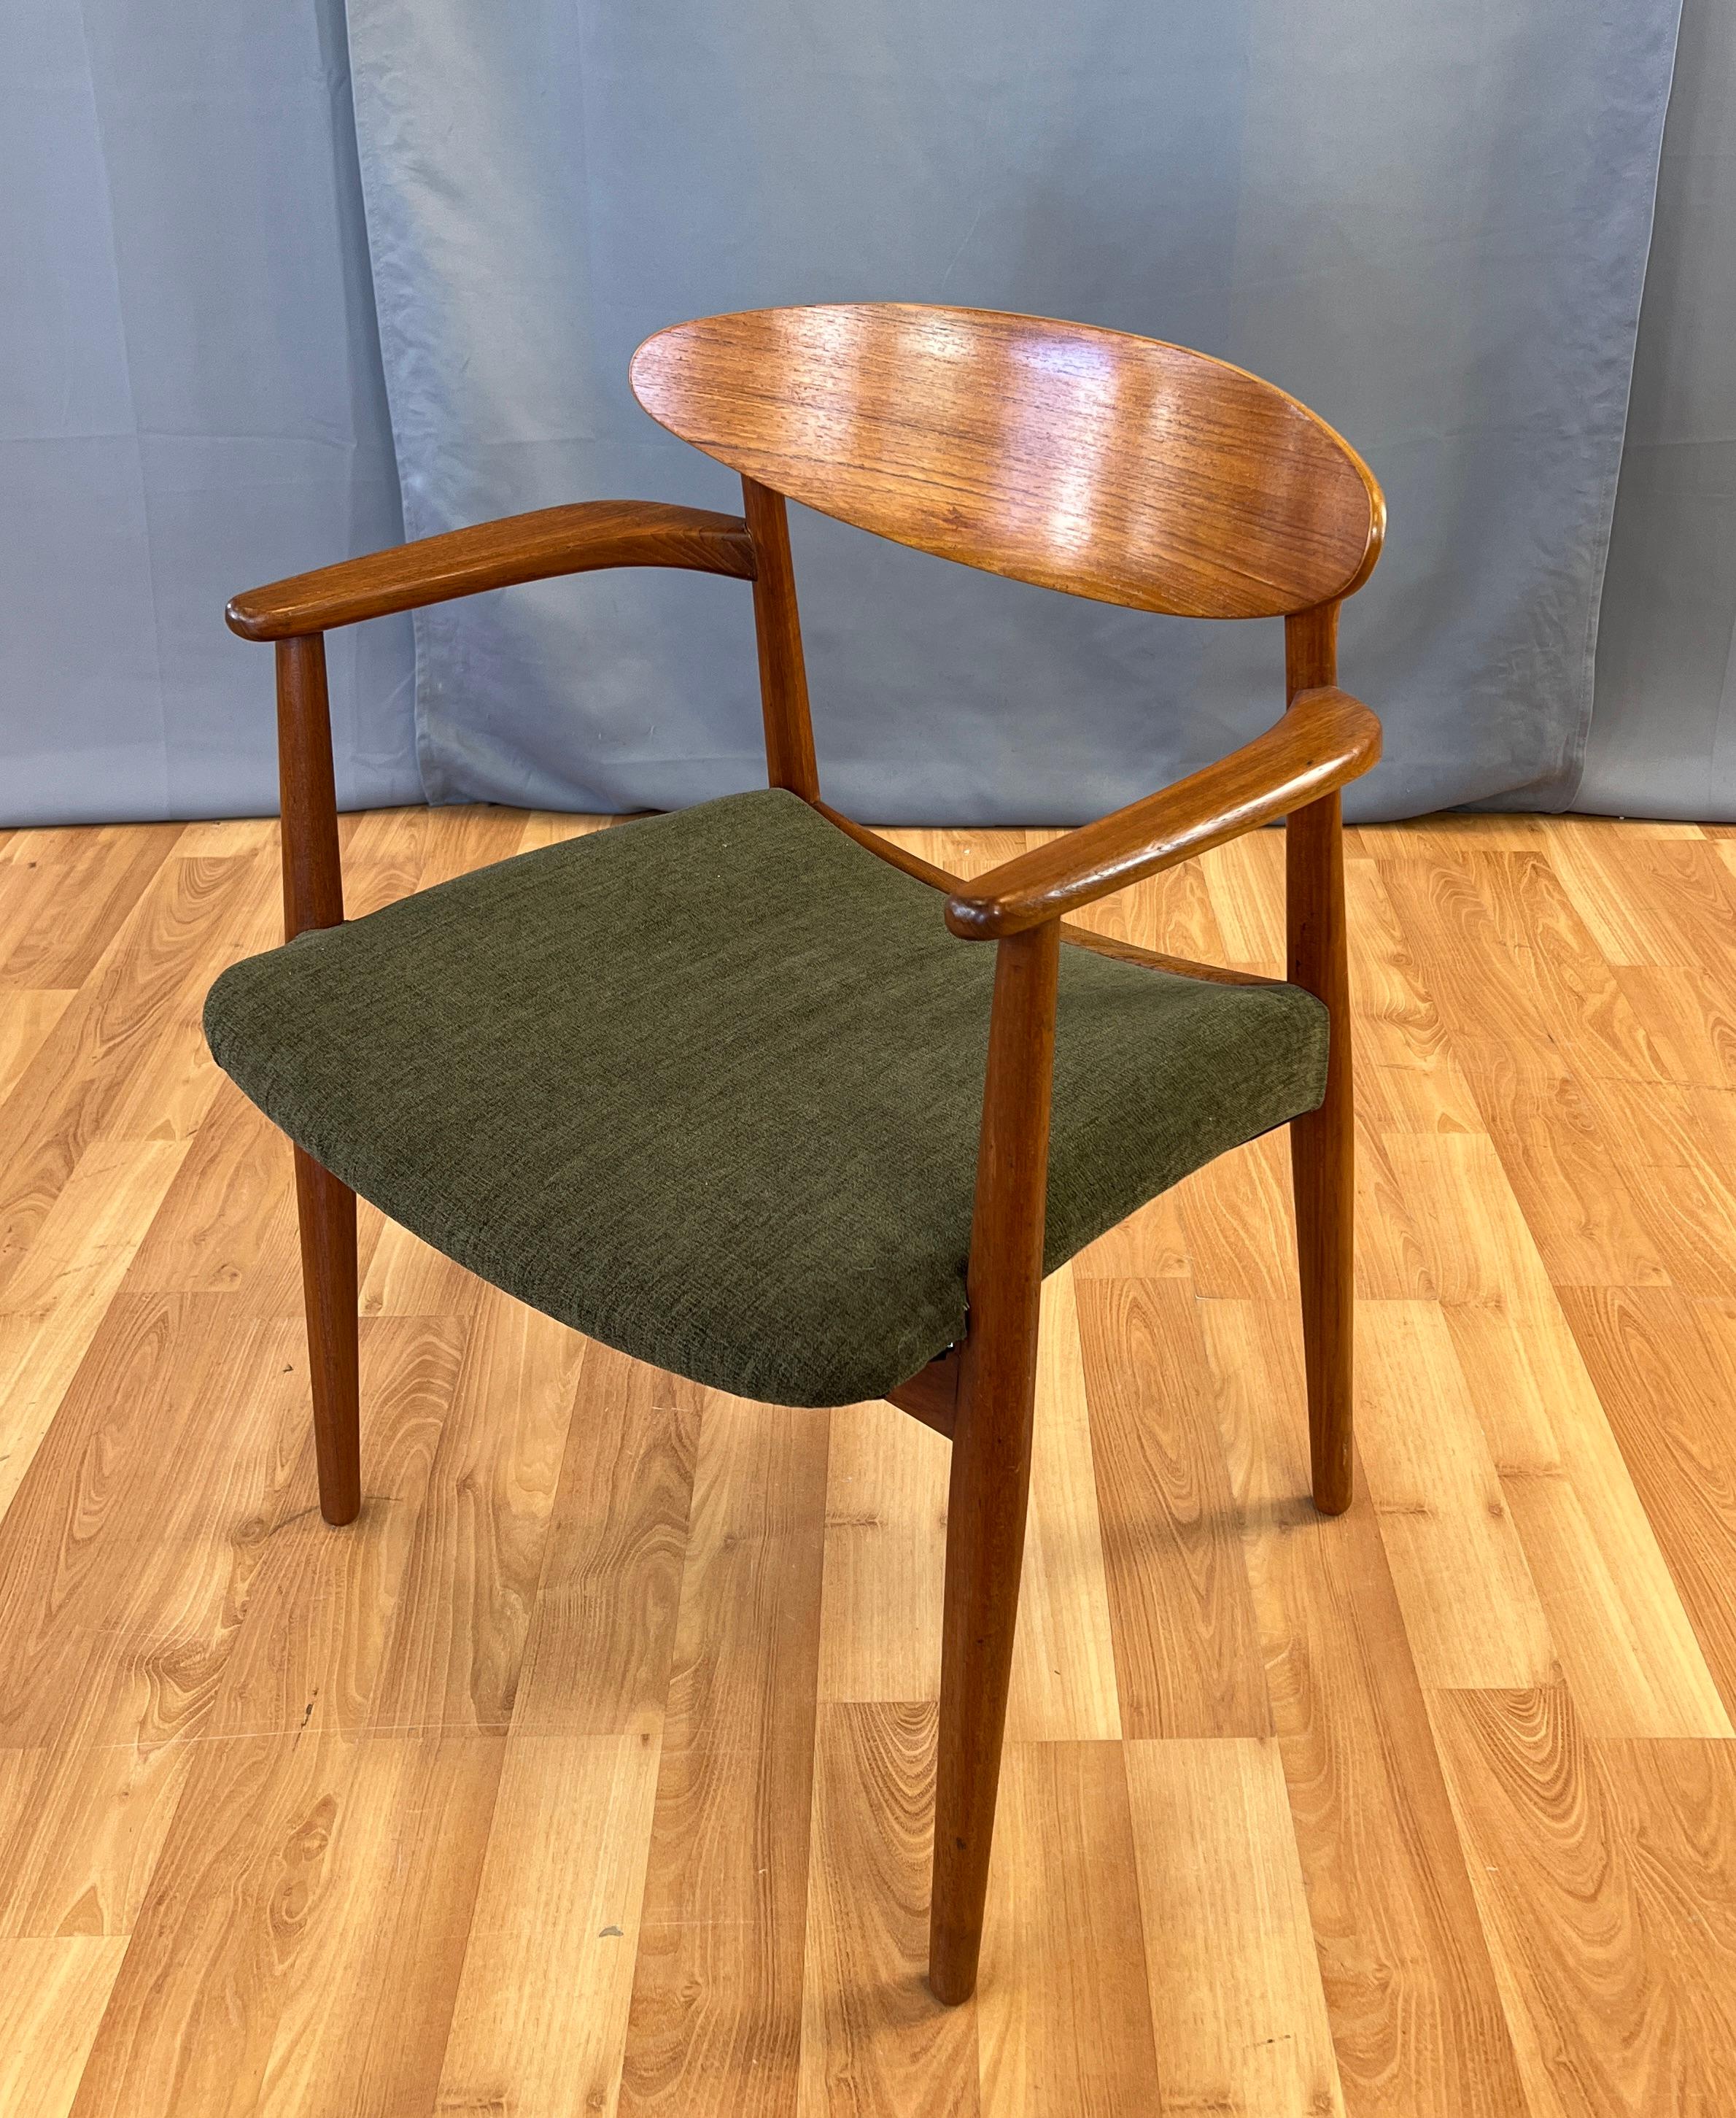 A Ejner Larsen and Aksel Bender Madsen teak armchair with dark green upholstery.
Teak frame, arms curve back, back rest is oval.